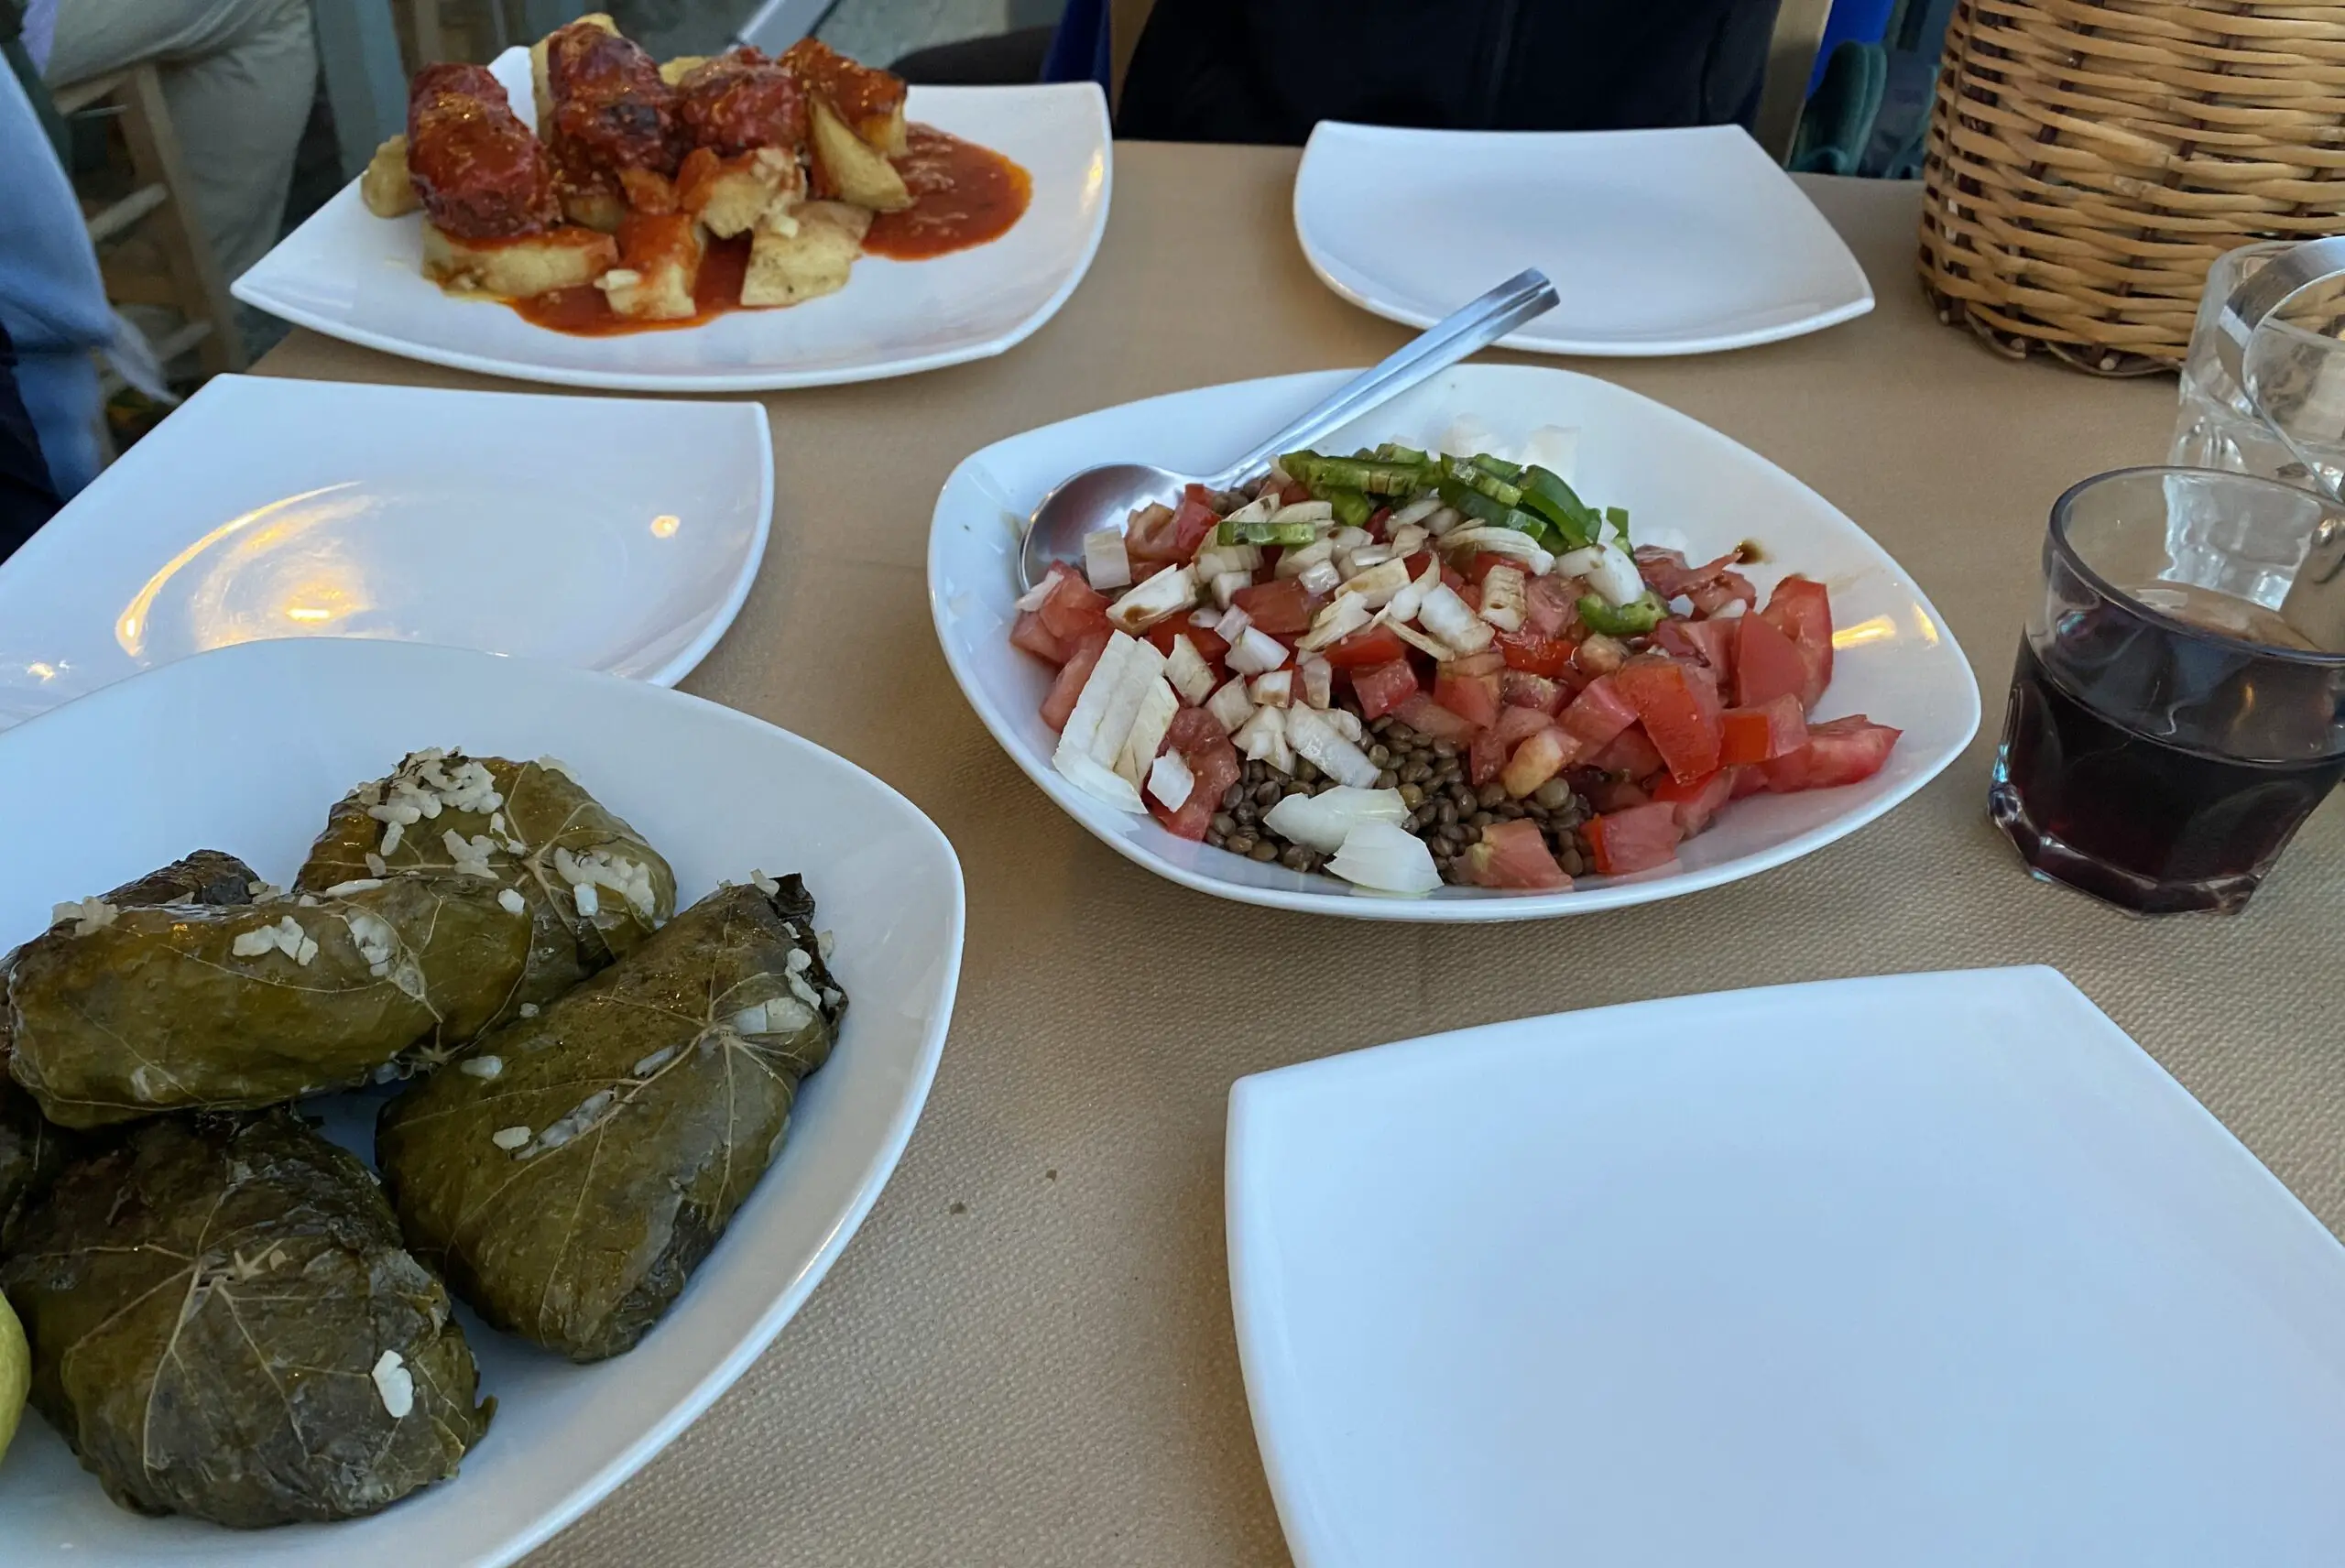 A meal at a Greek taverna